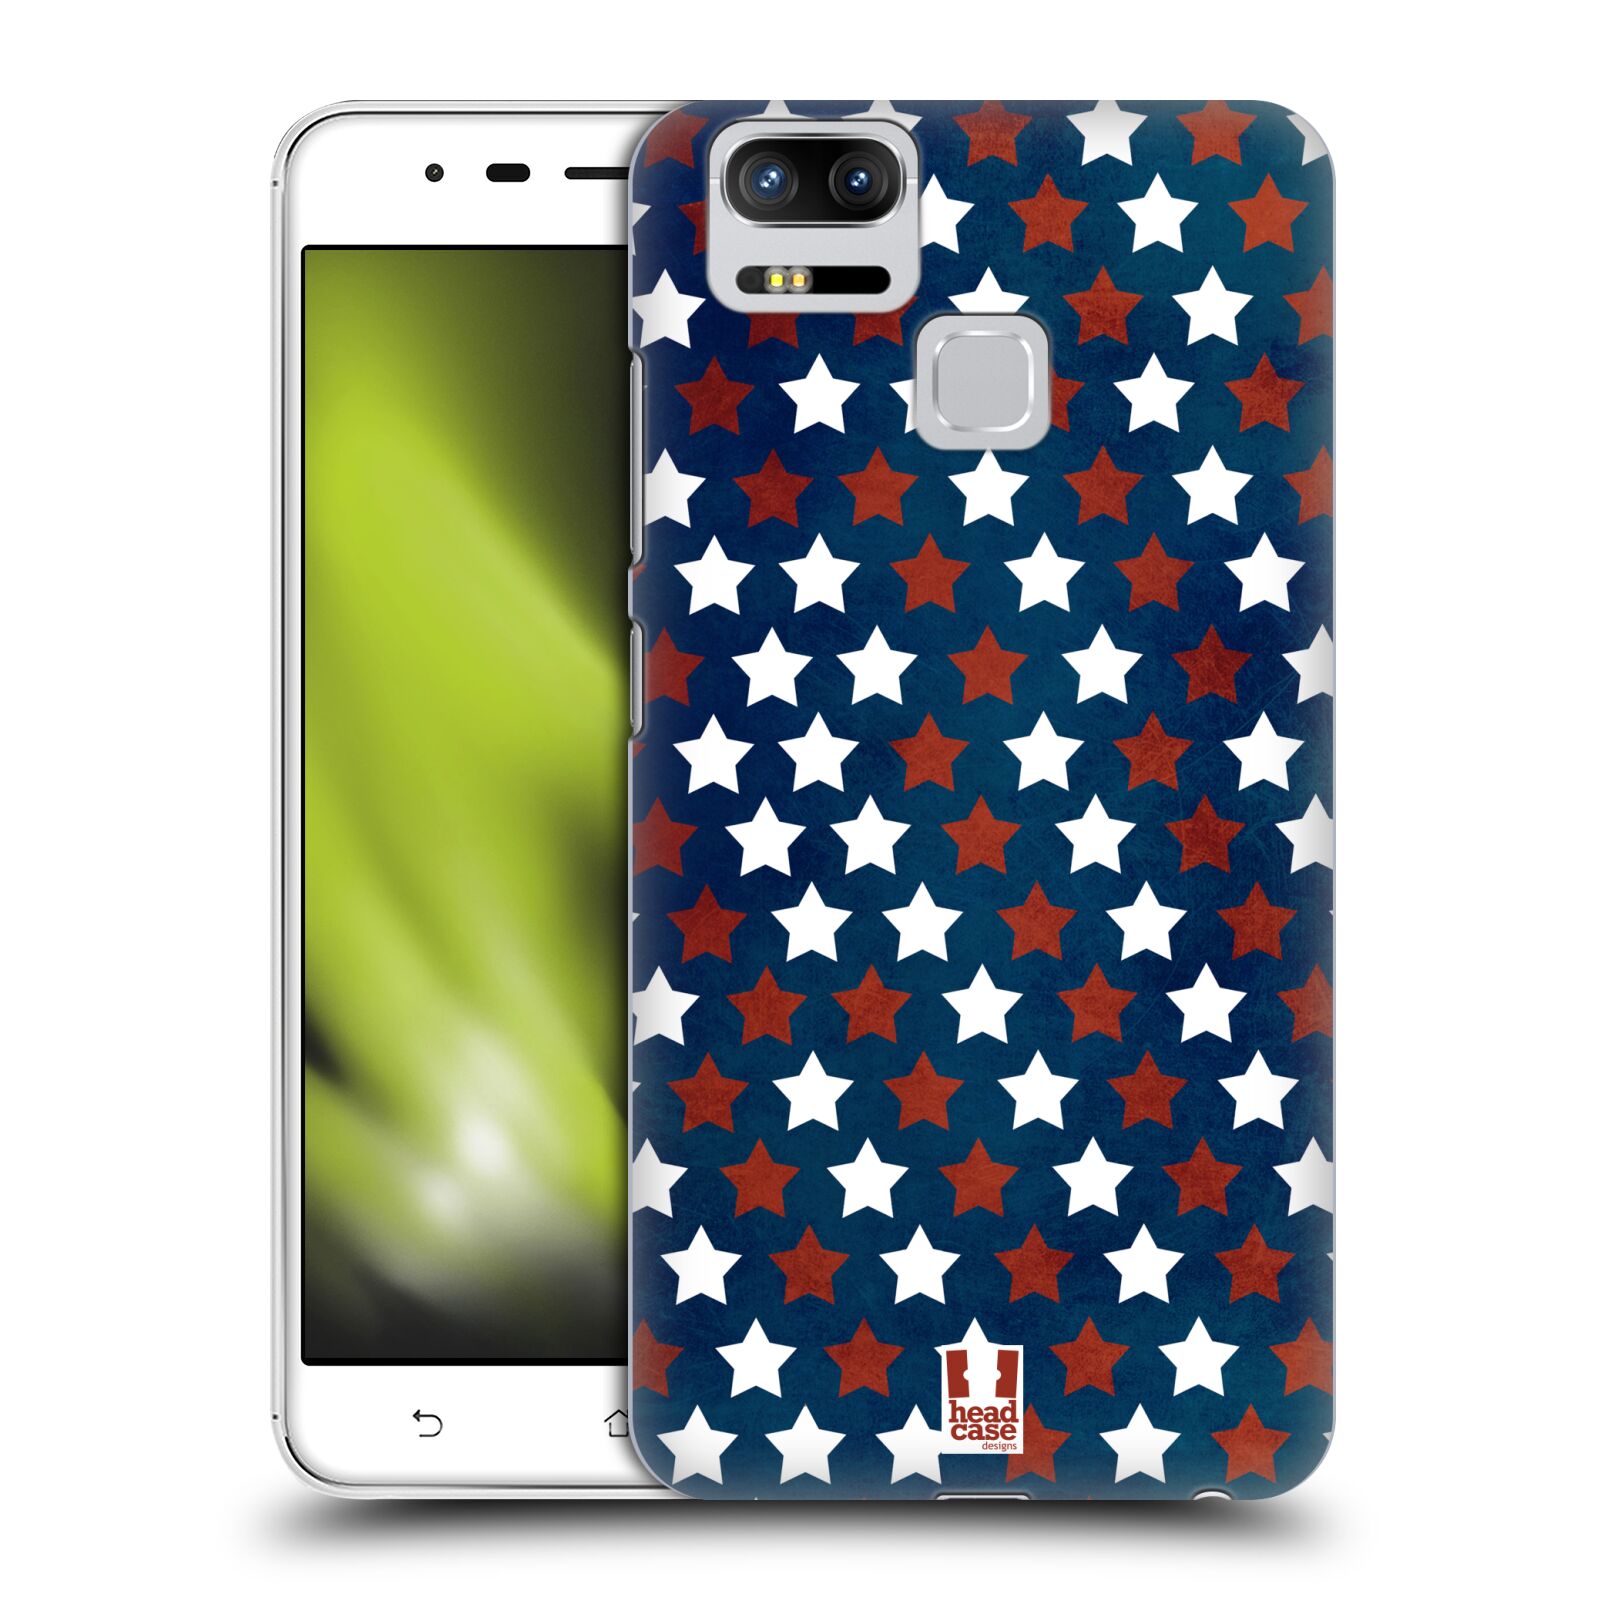 HEAD CASE plastový obal na mobil Asus Zenfone 3 Zoom ZE553KL vzor USA VLAJKA HVĚZDY V MODRÉM